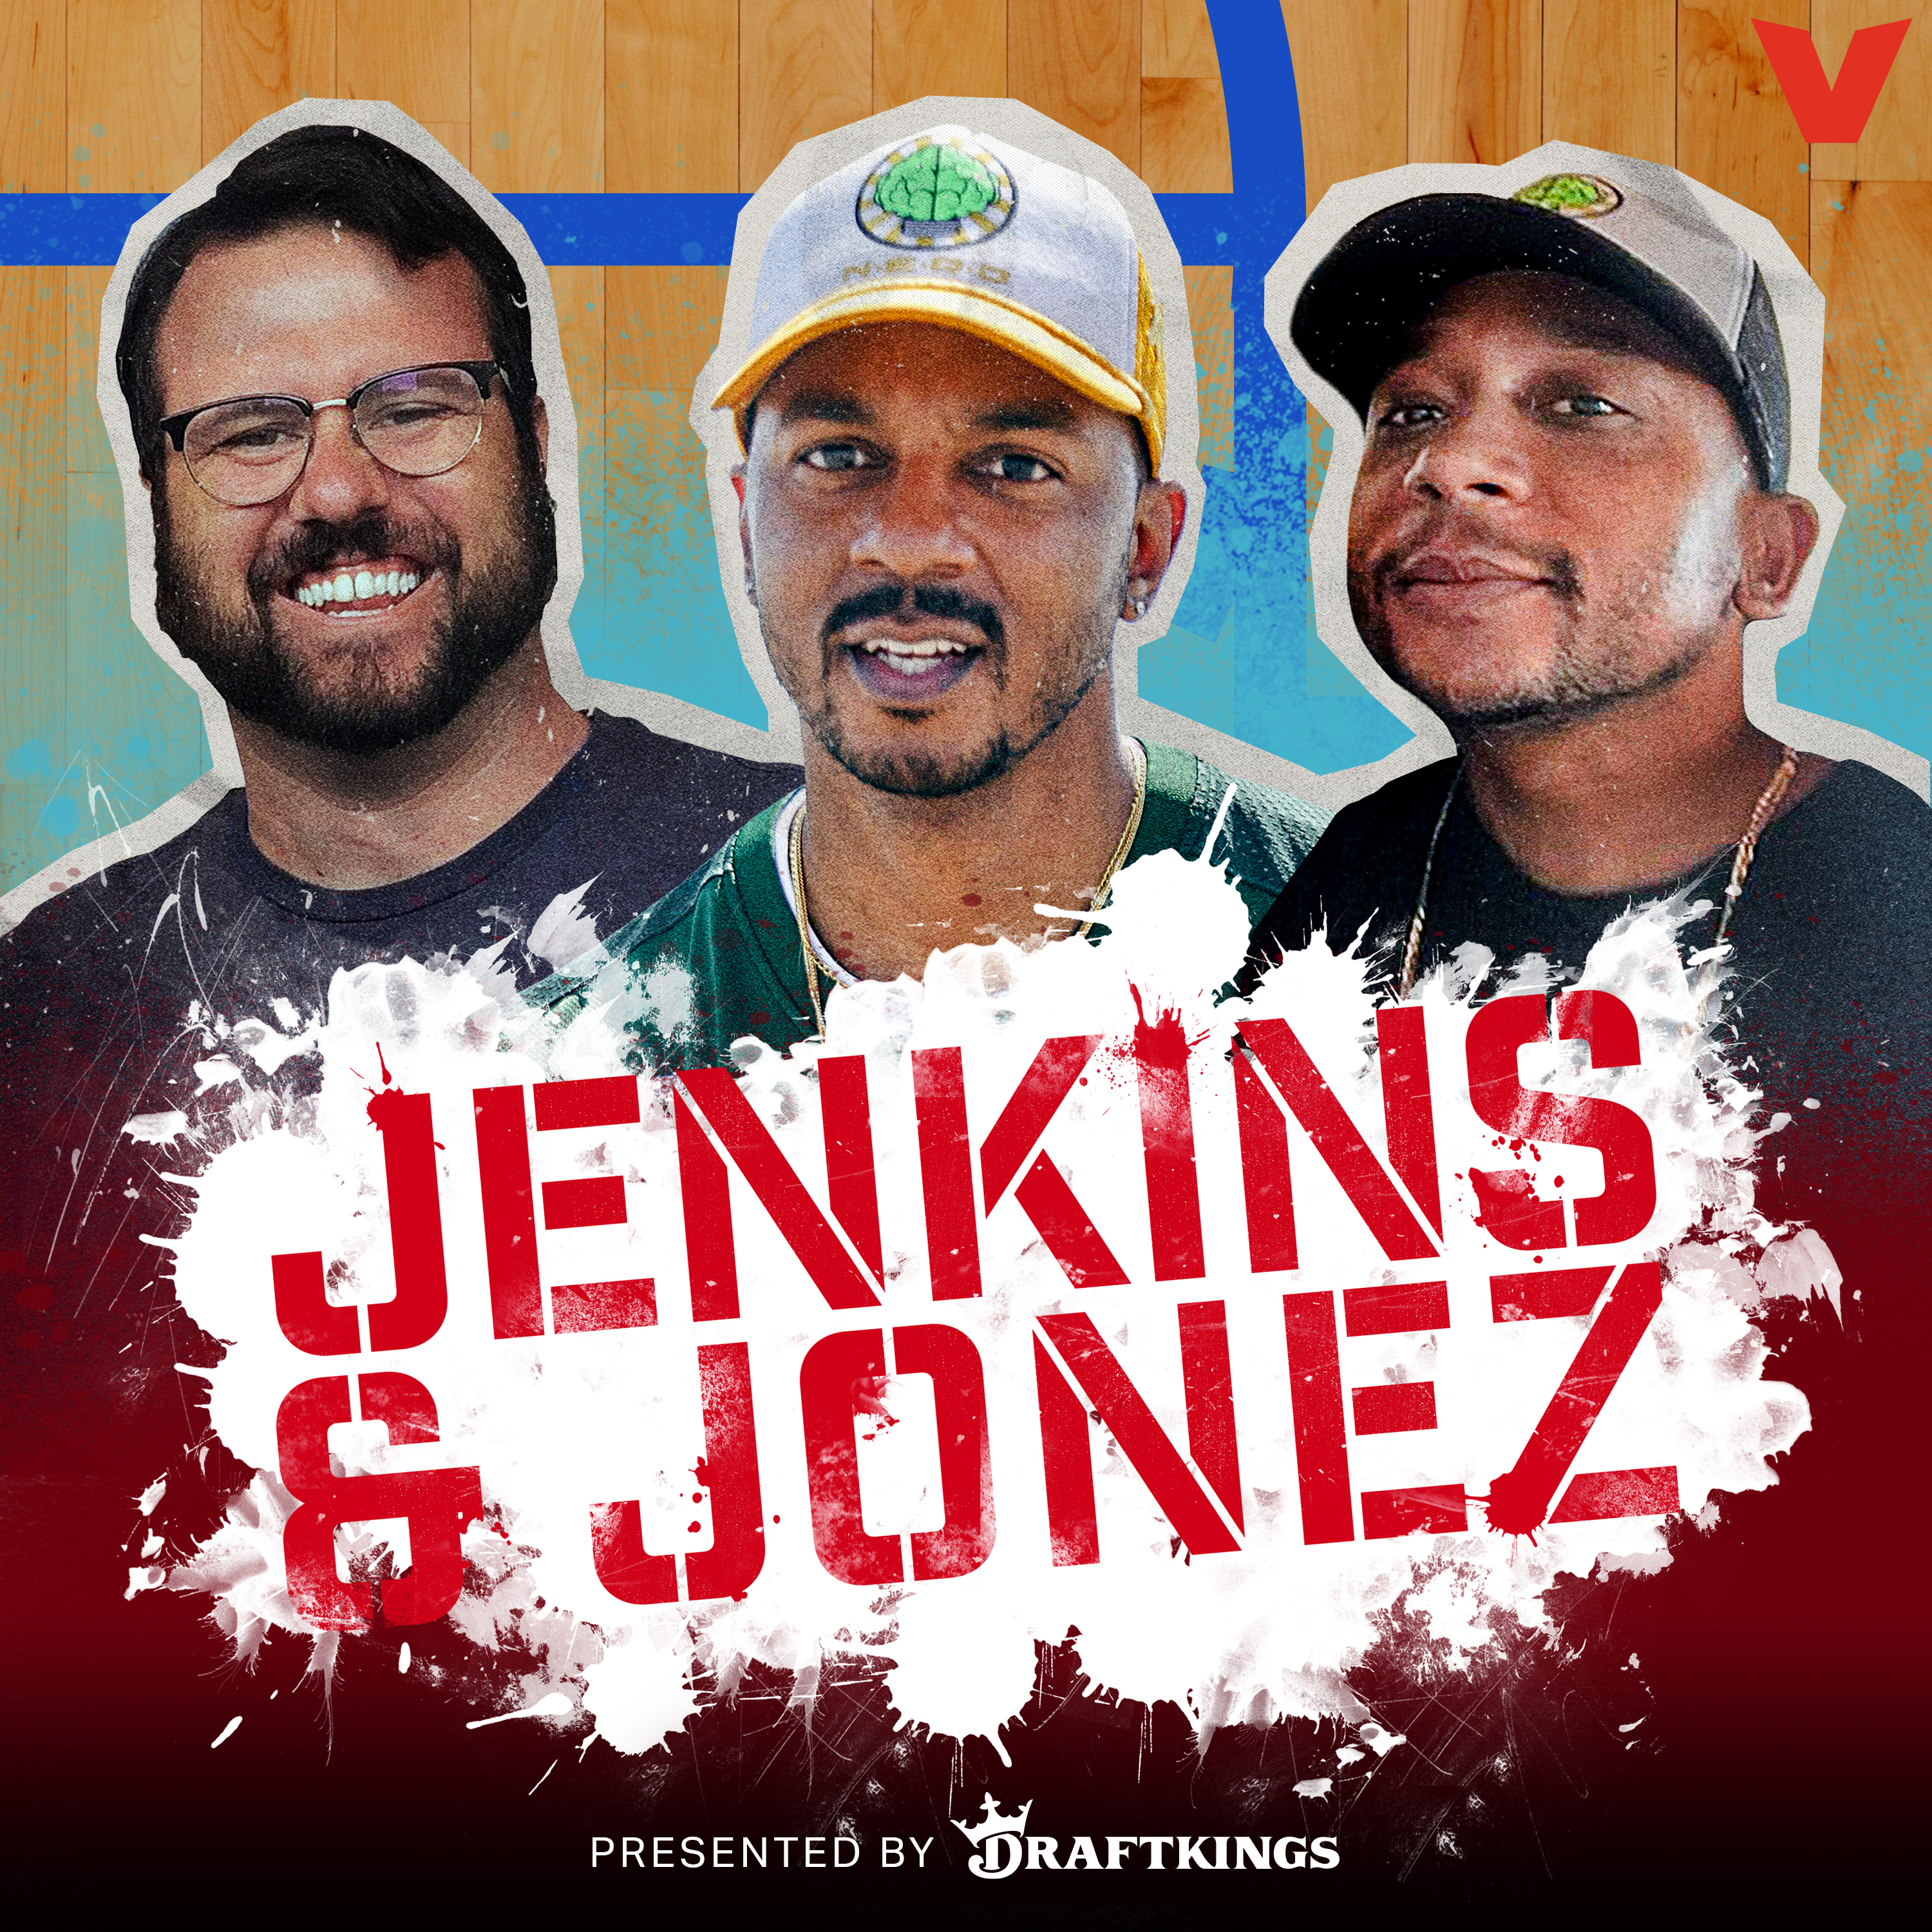 Jenkins and Jonez - Serena, the GOAT